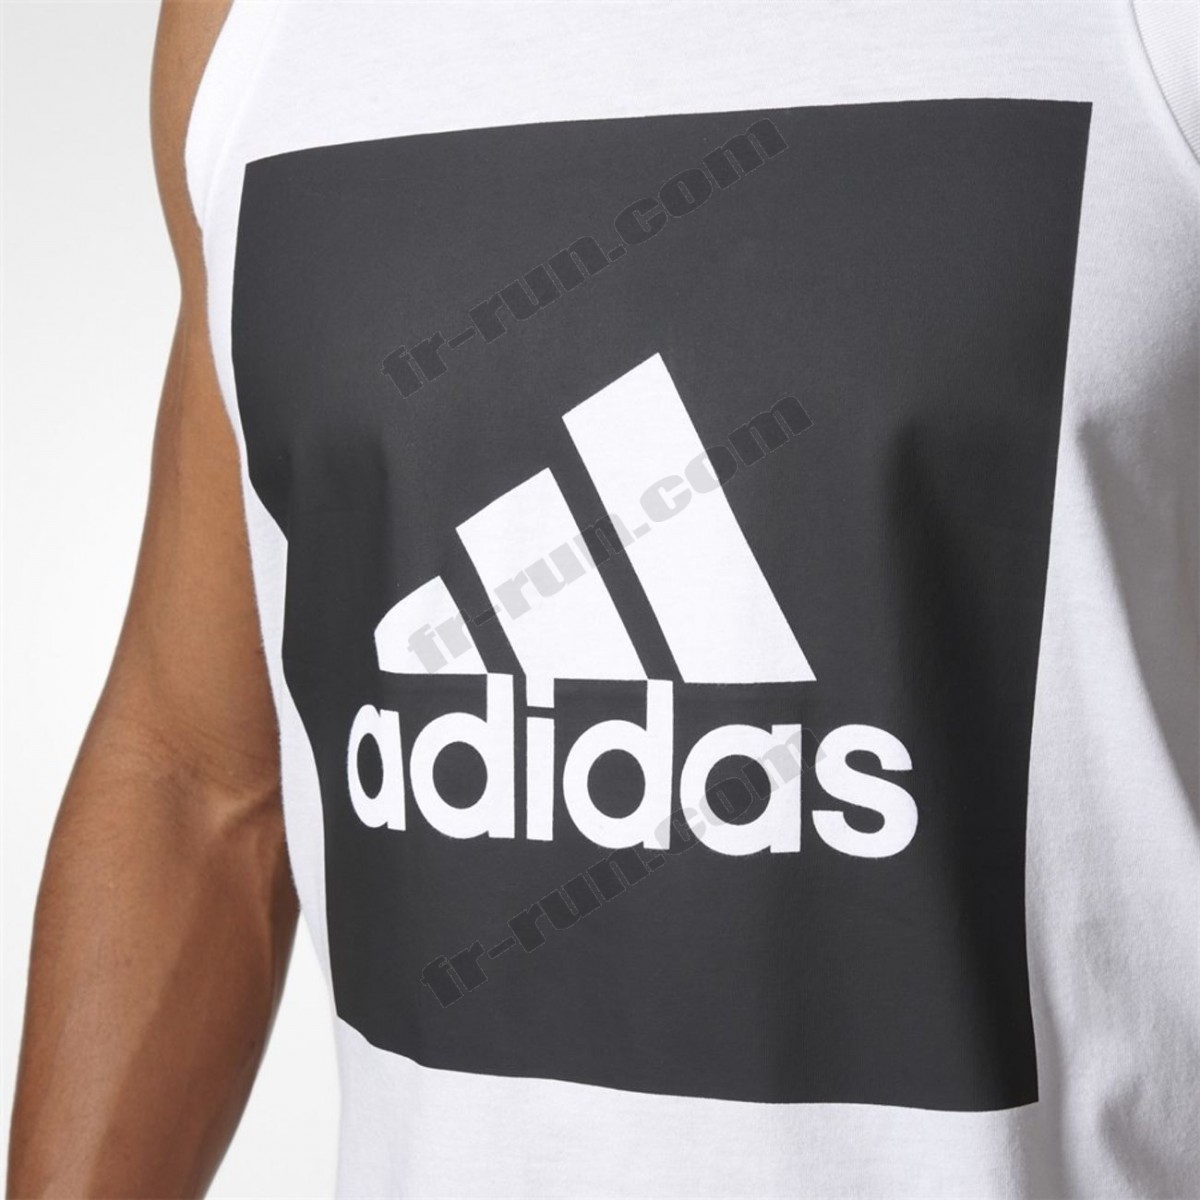 Adidas/running homme ADIDAS Adidas Essentials Tank ◇◇◇ Pas Cher Du Tout - -4